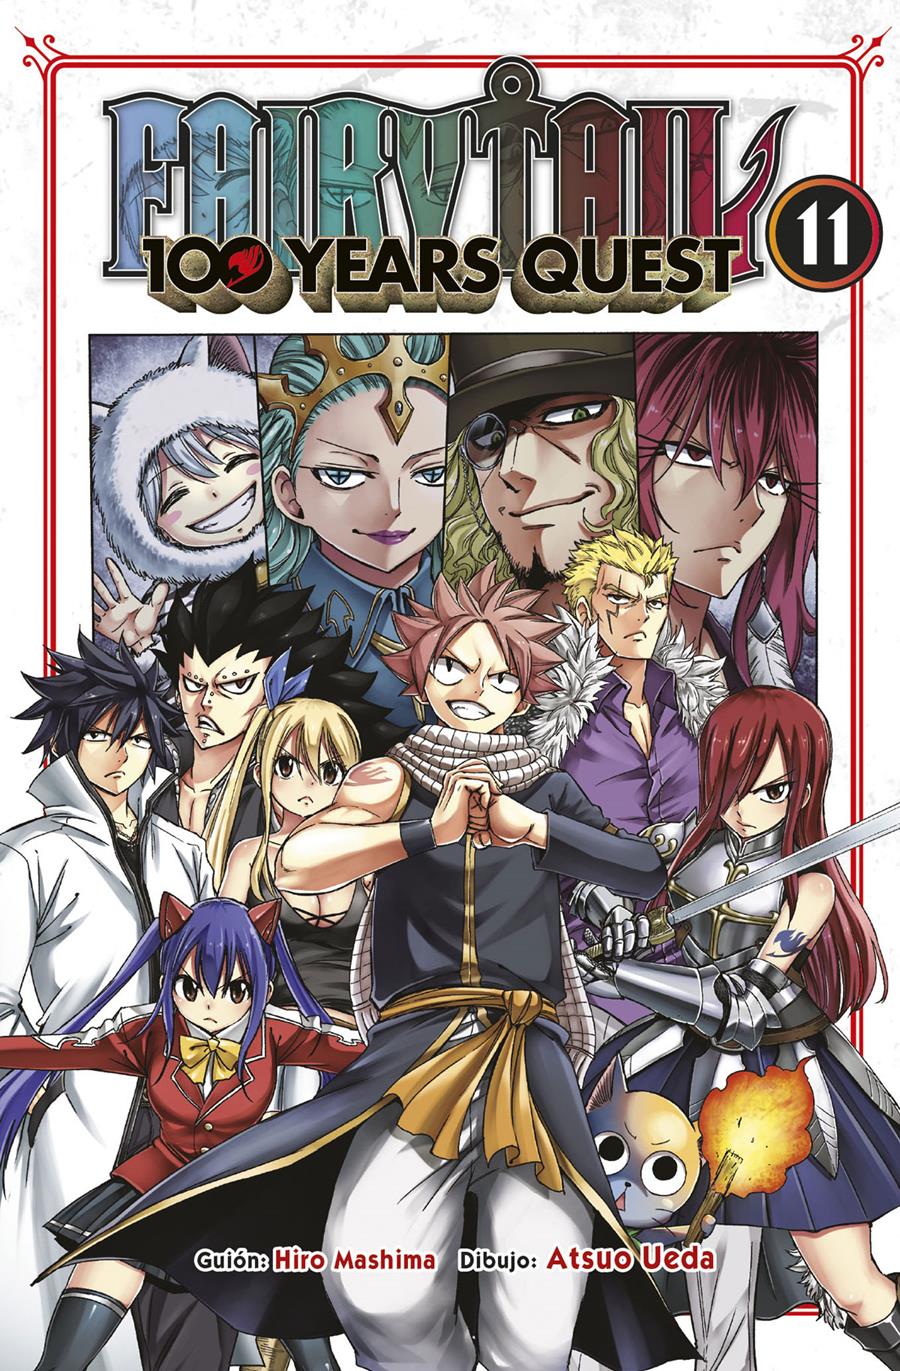 Fairy Tail 100 Years Quest 11 | N0822-NOR07 | Hiro Mashima, Atsuo Ueda | Terra de Còmic - Tu tienda de cómics online especializada en cómics, manga y merchandising